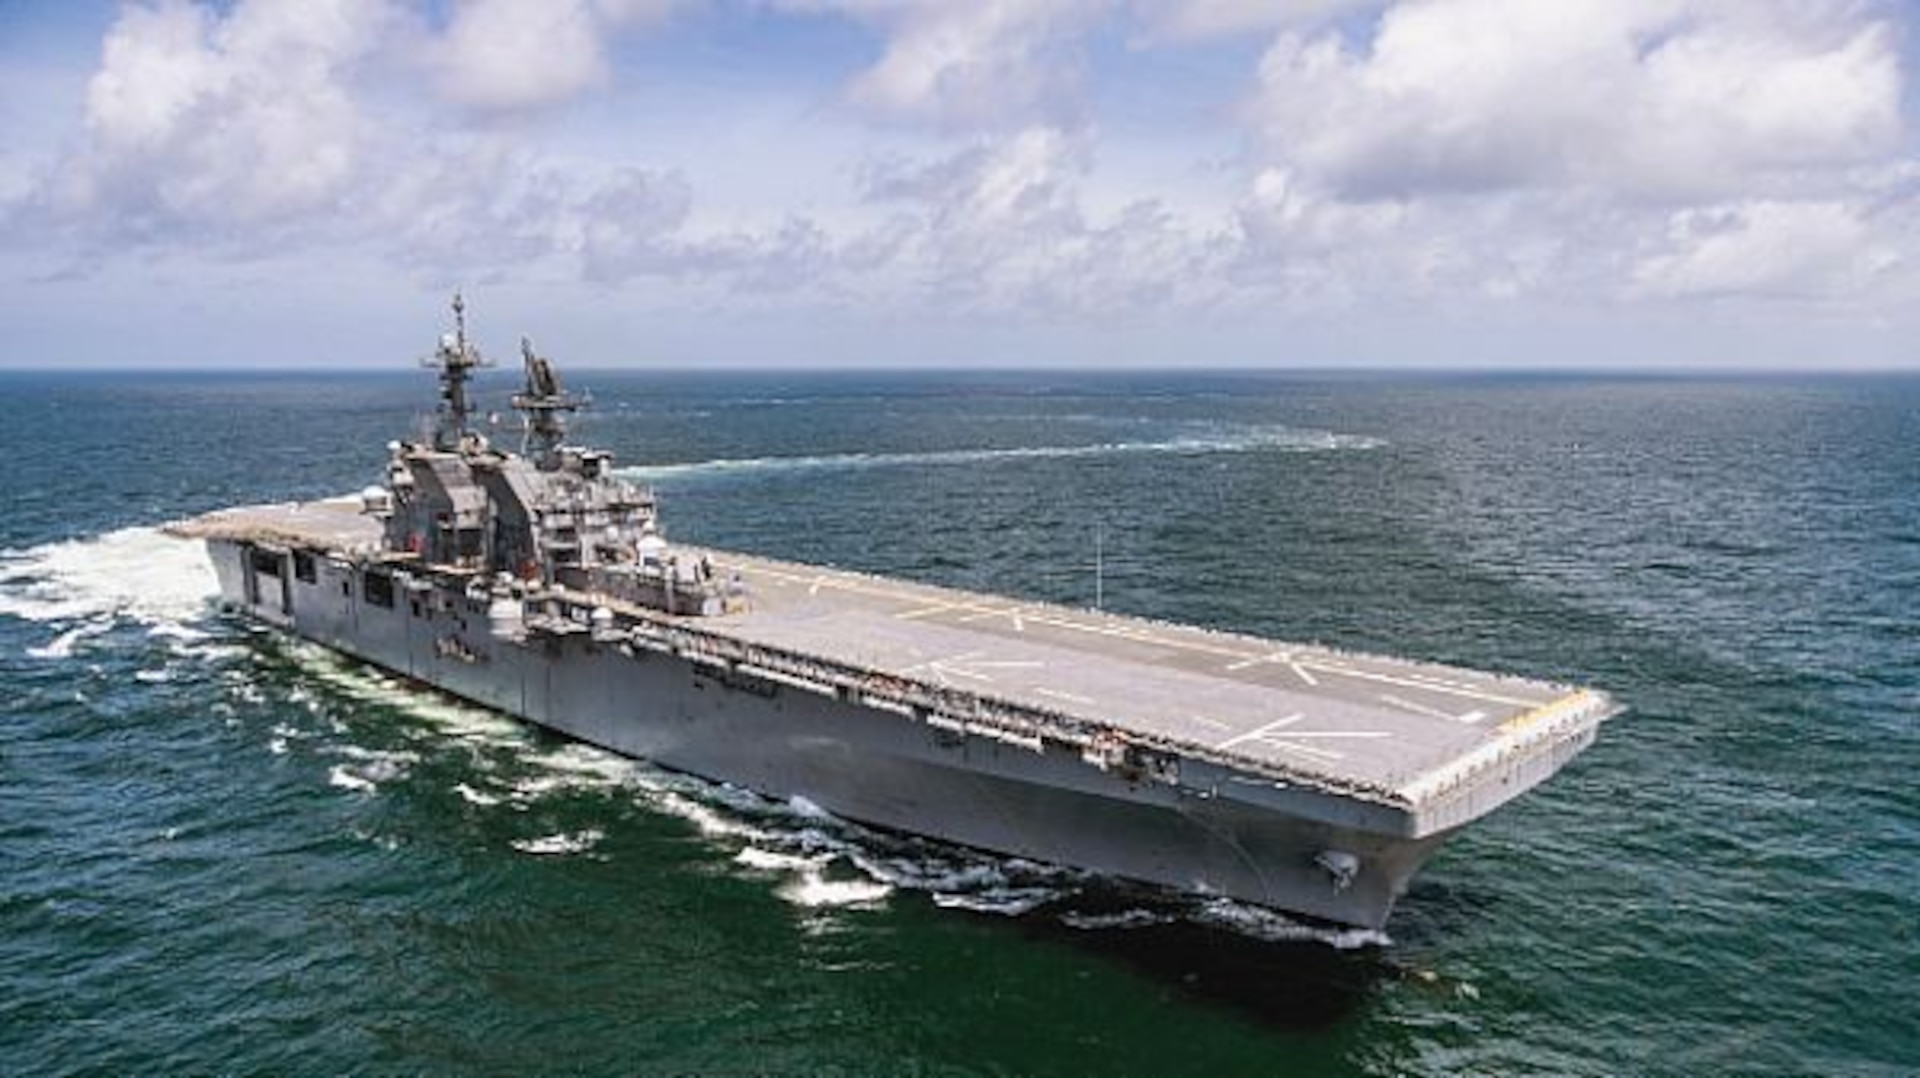 USS Tripoli (LHA 7) transits the Gulf of Mexico